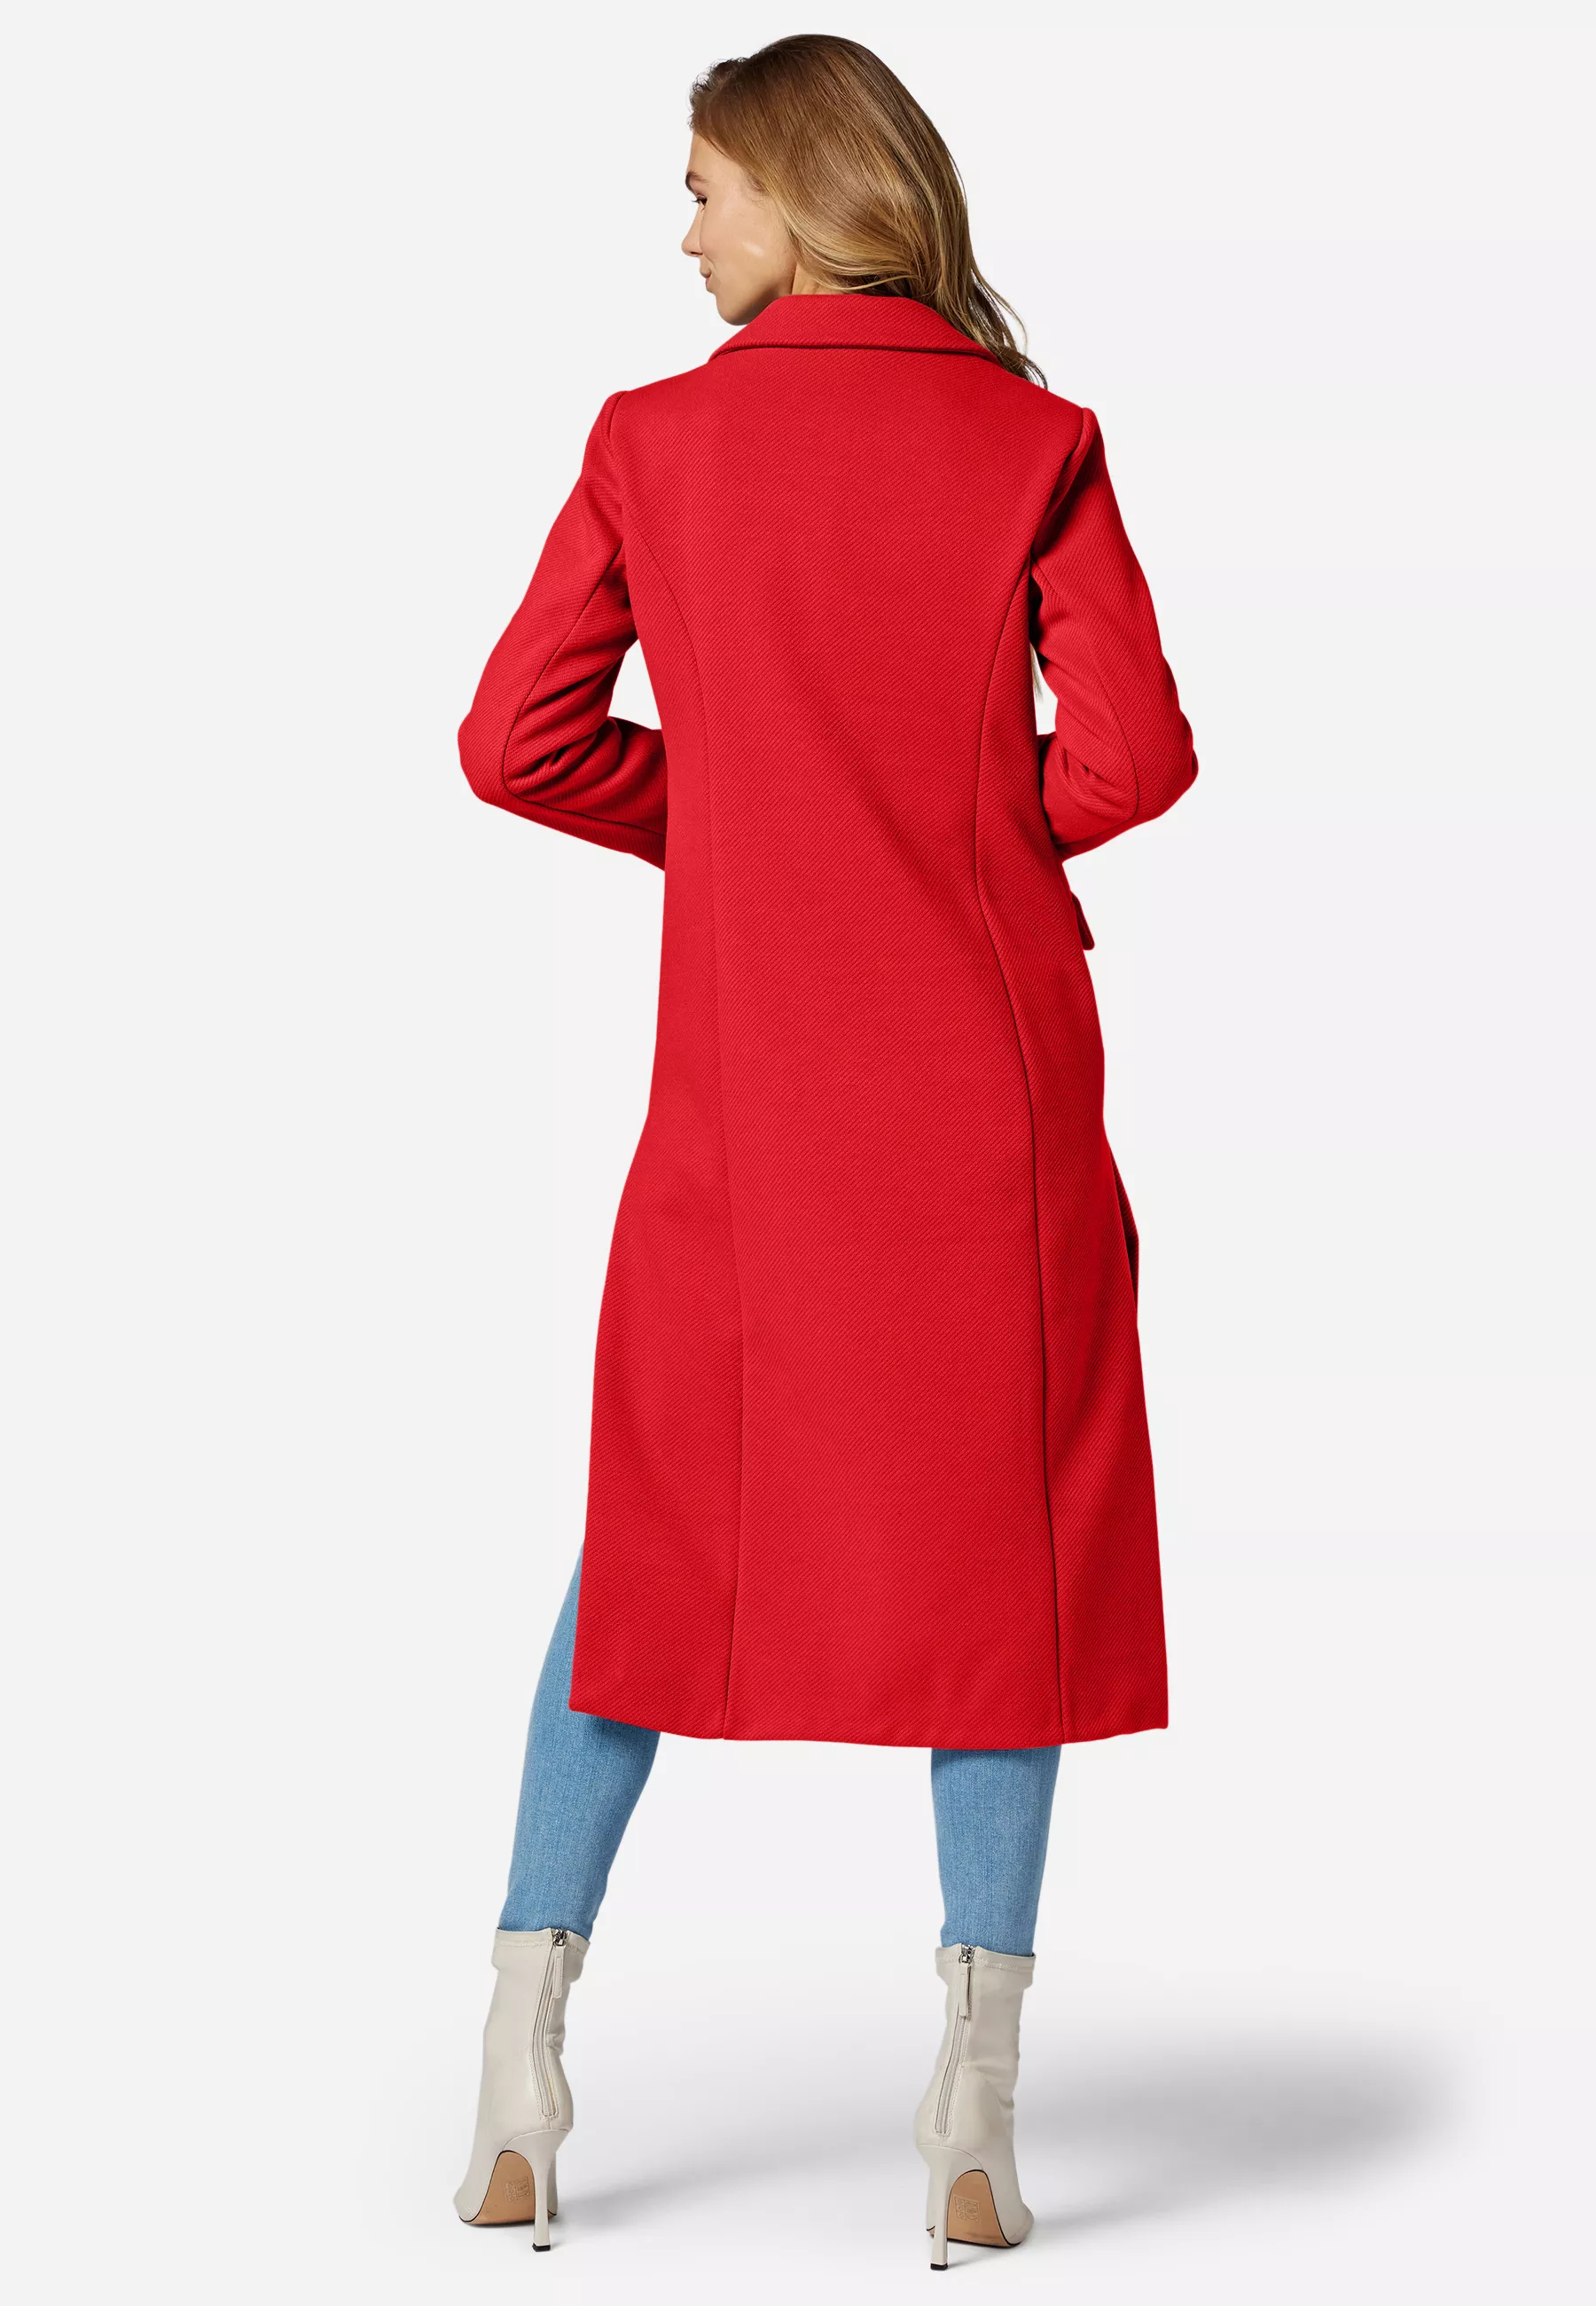 Damen Mantel Grazia in Rot von Ricano, Rückansicht am Model